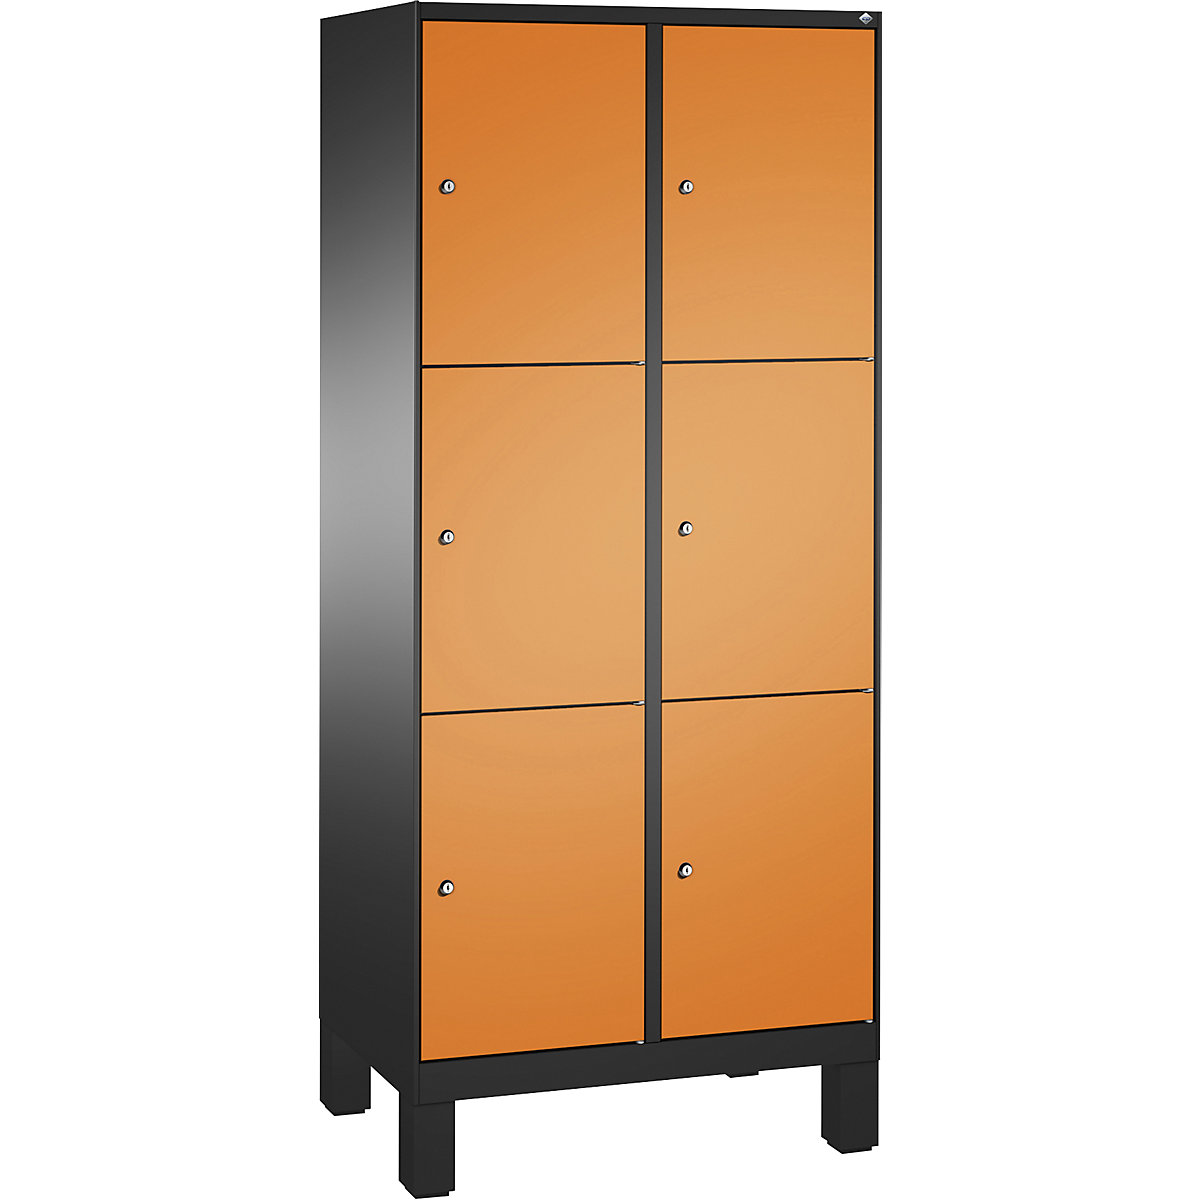 EVOLO locker unit, with feet – C+P, 2 compartments, 3 shelf compartments each, compartment width 400 mm, black grey / yellow orange